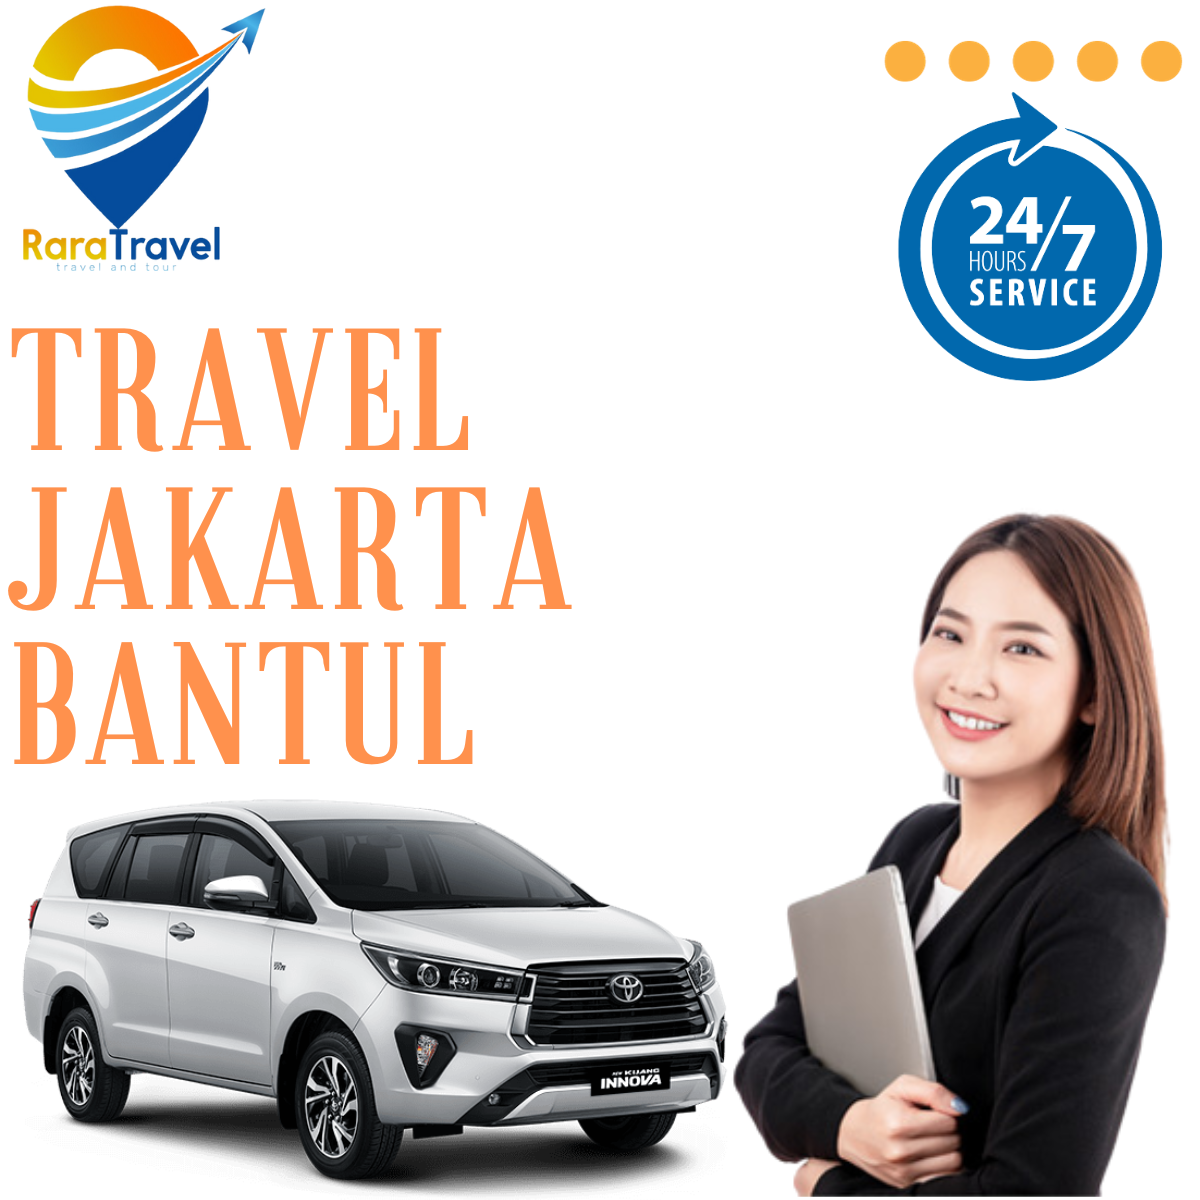 Travel Jakarta Bantul